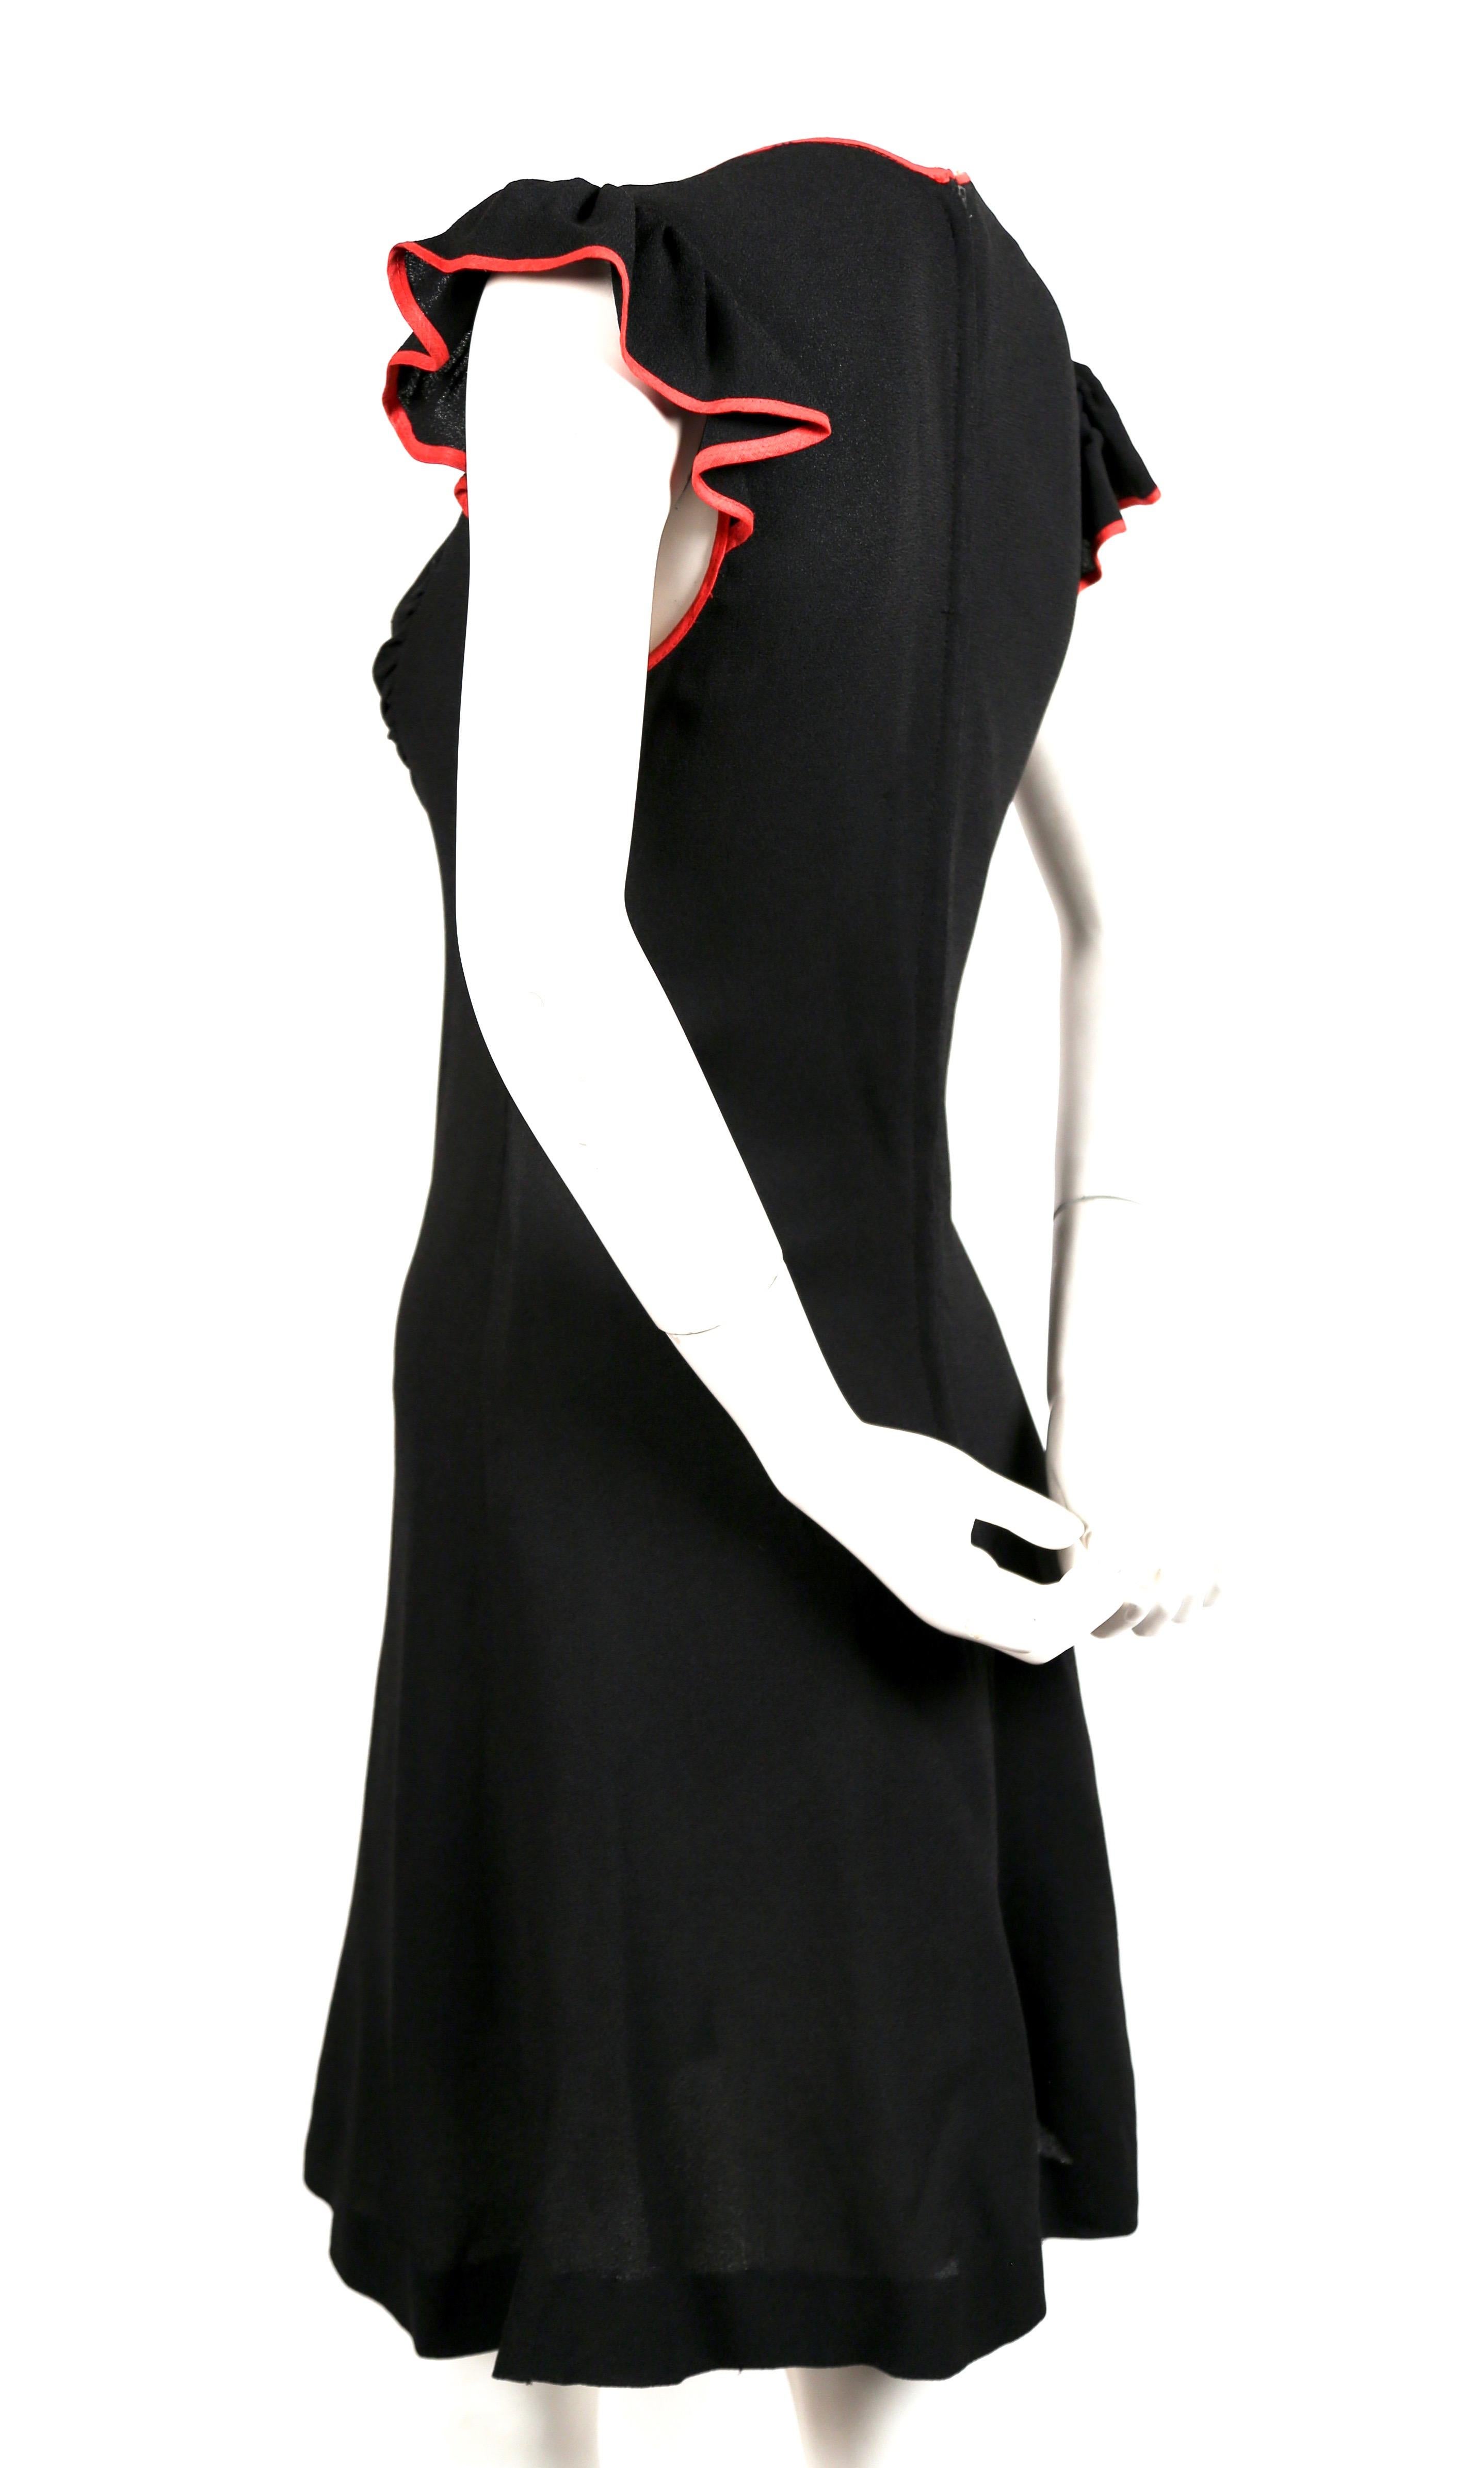 black dress with red trim